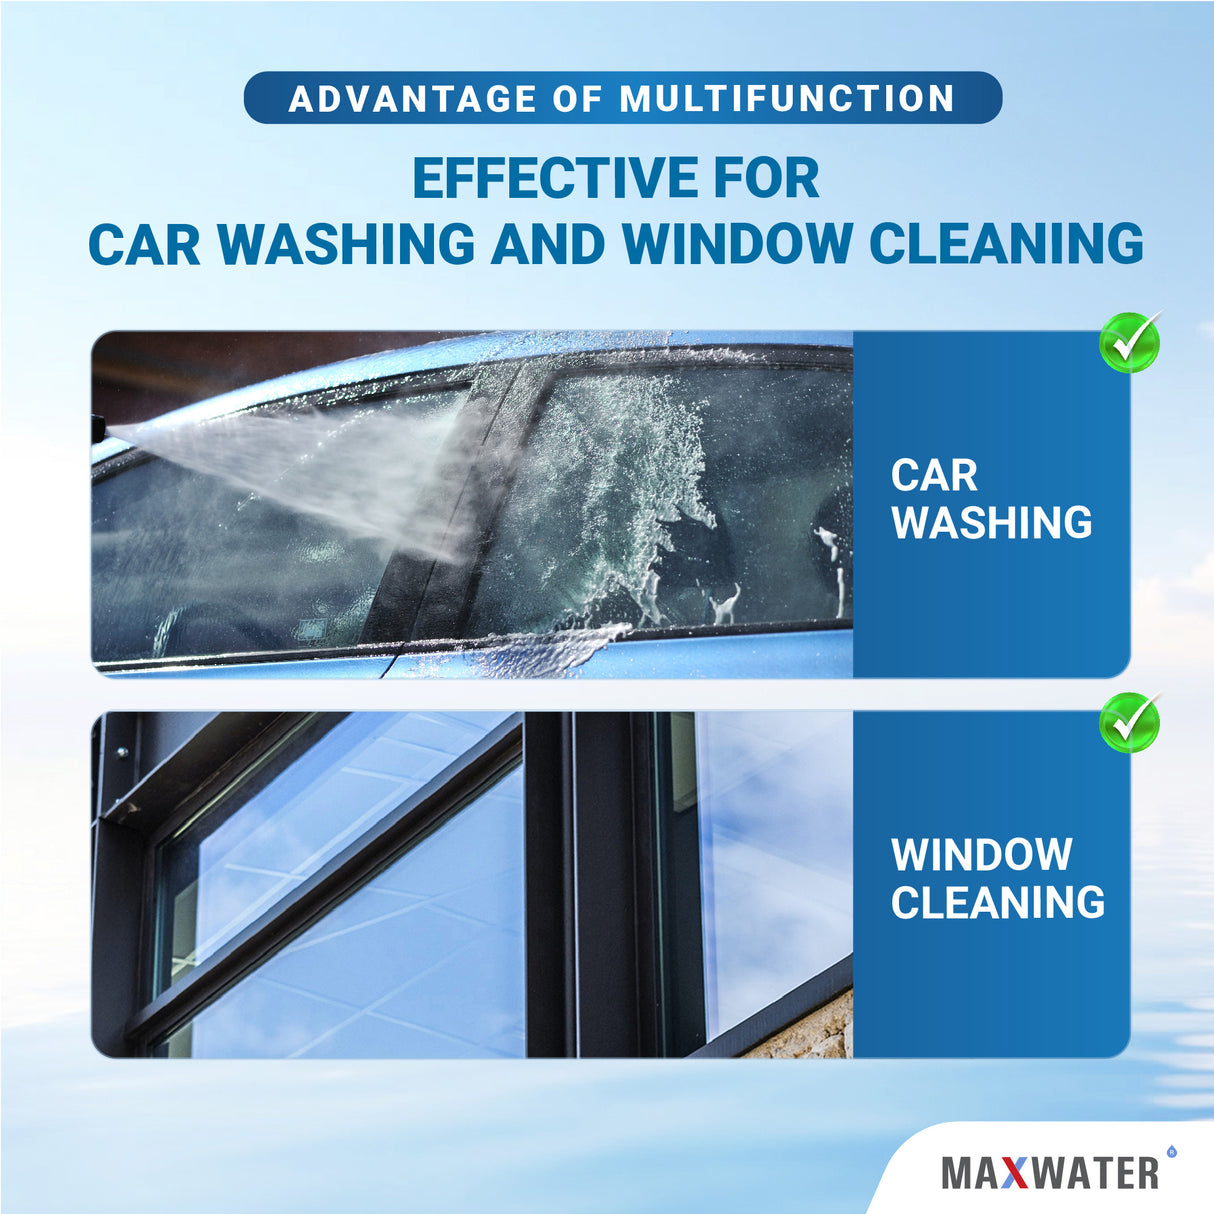 Advanced Window Cleaning: De-ionized water for streak-free results